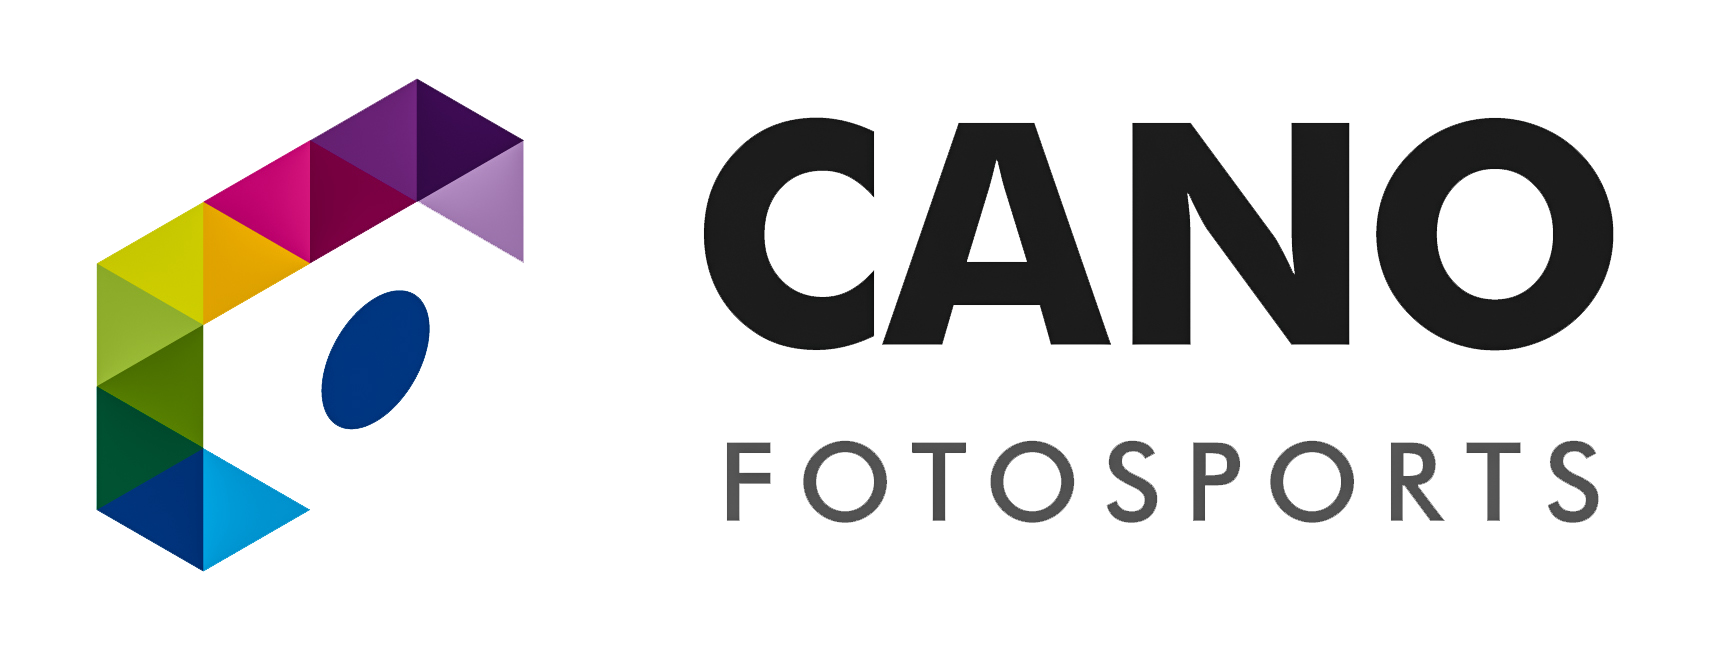 Cano Fotosports